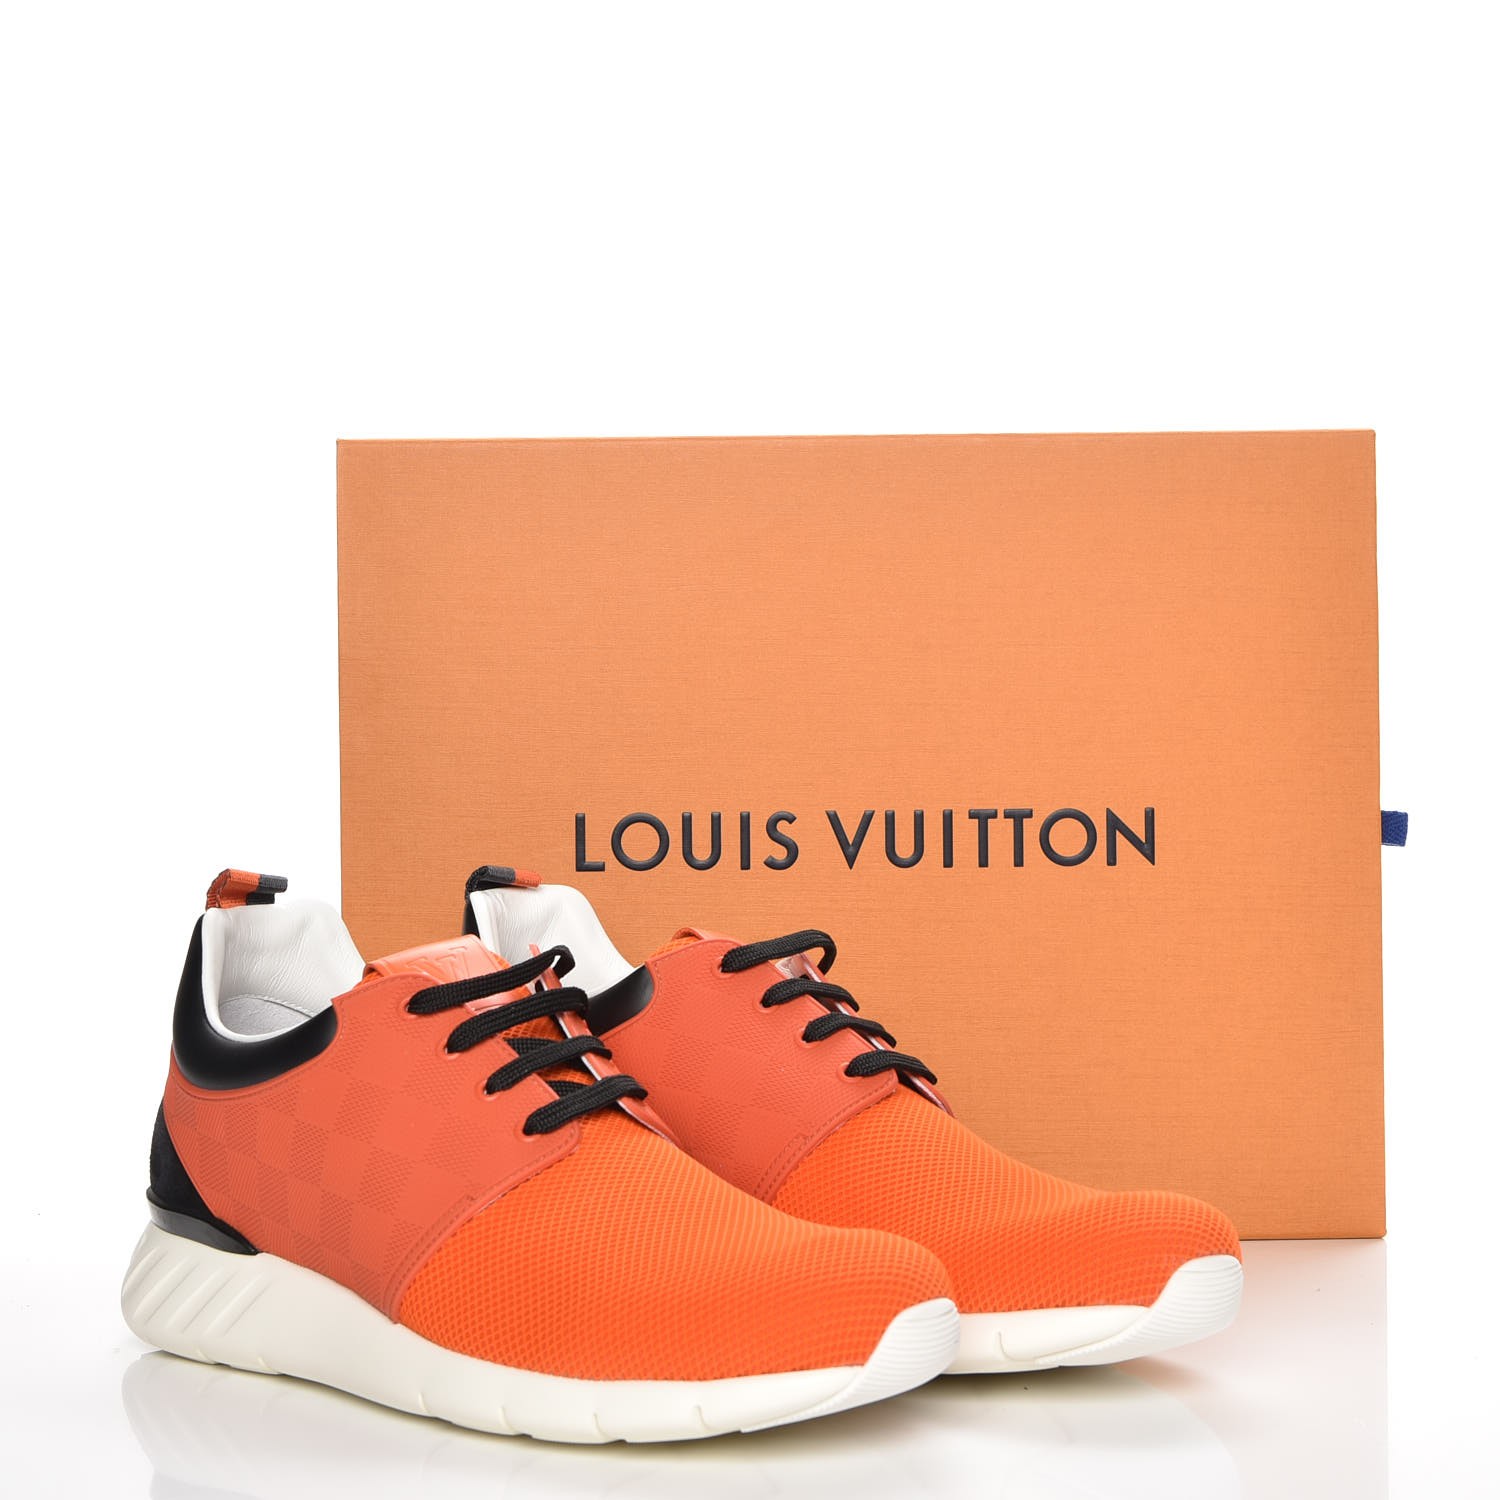 LOUIS VUITTON Mens Damier Rubber Mesh Suede Fastlane Low Sneakers 9 Orange 227702